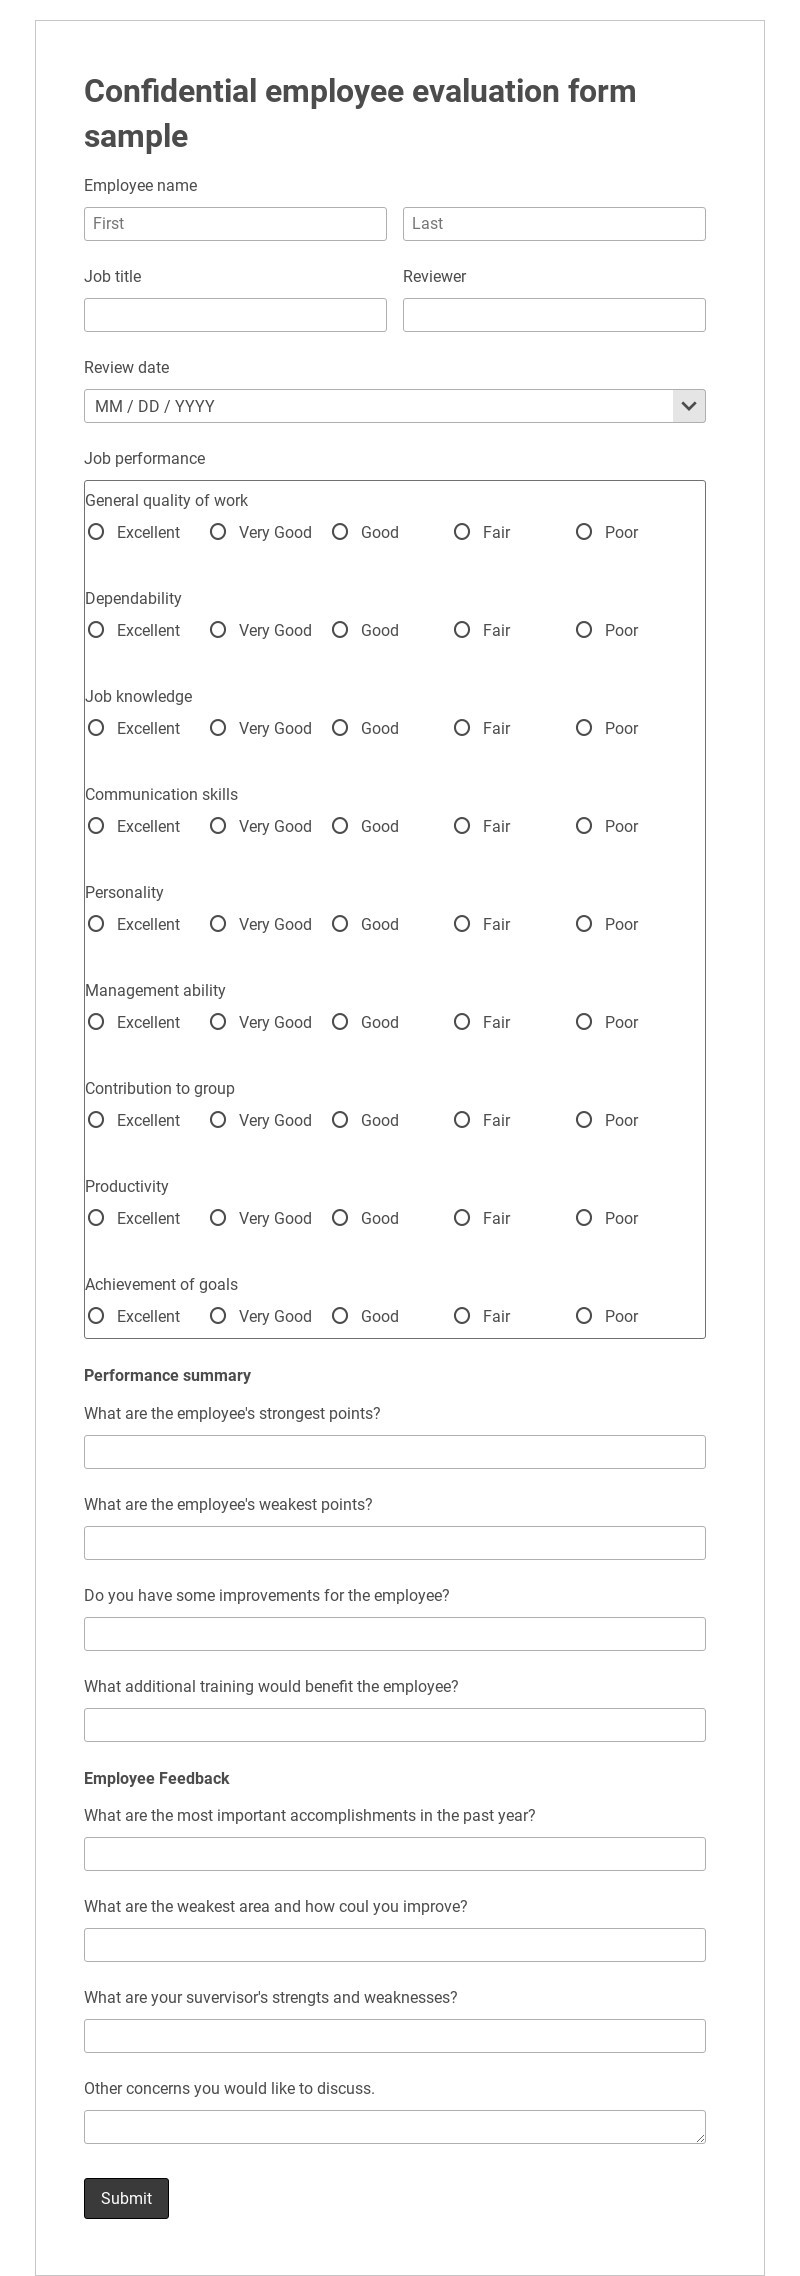 employee feedback form examples